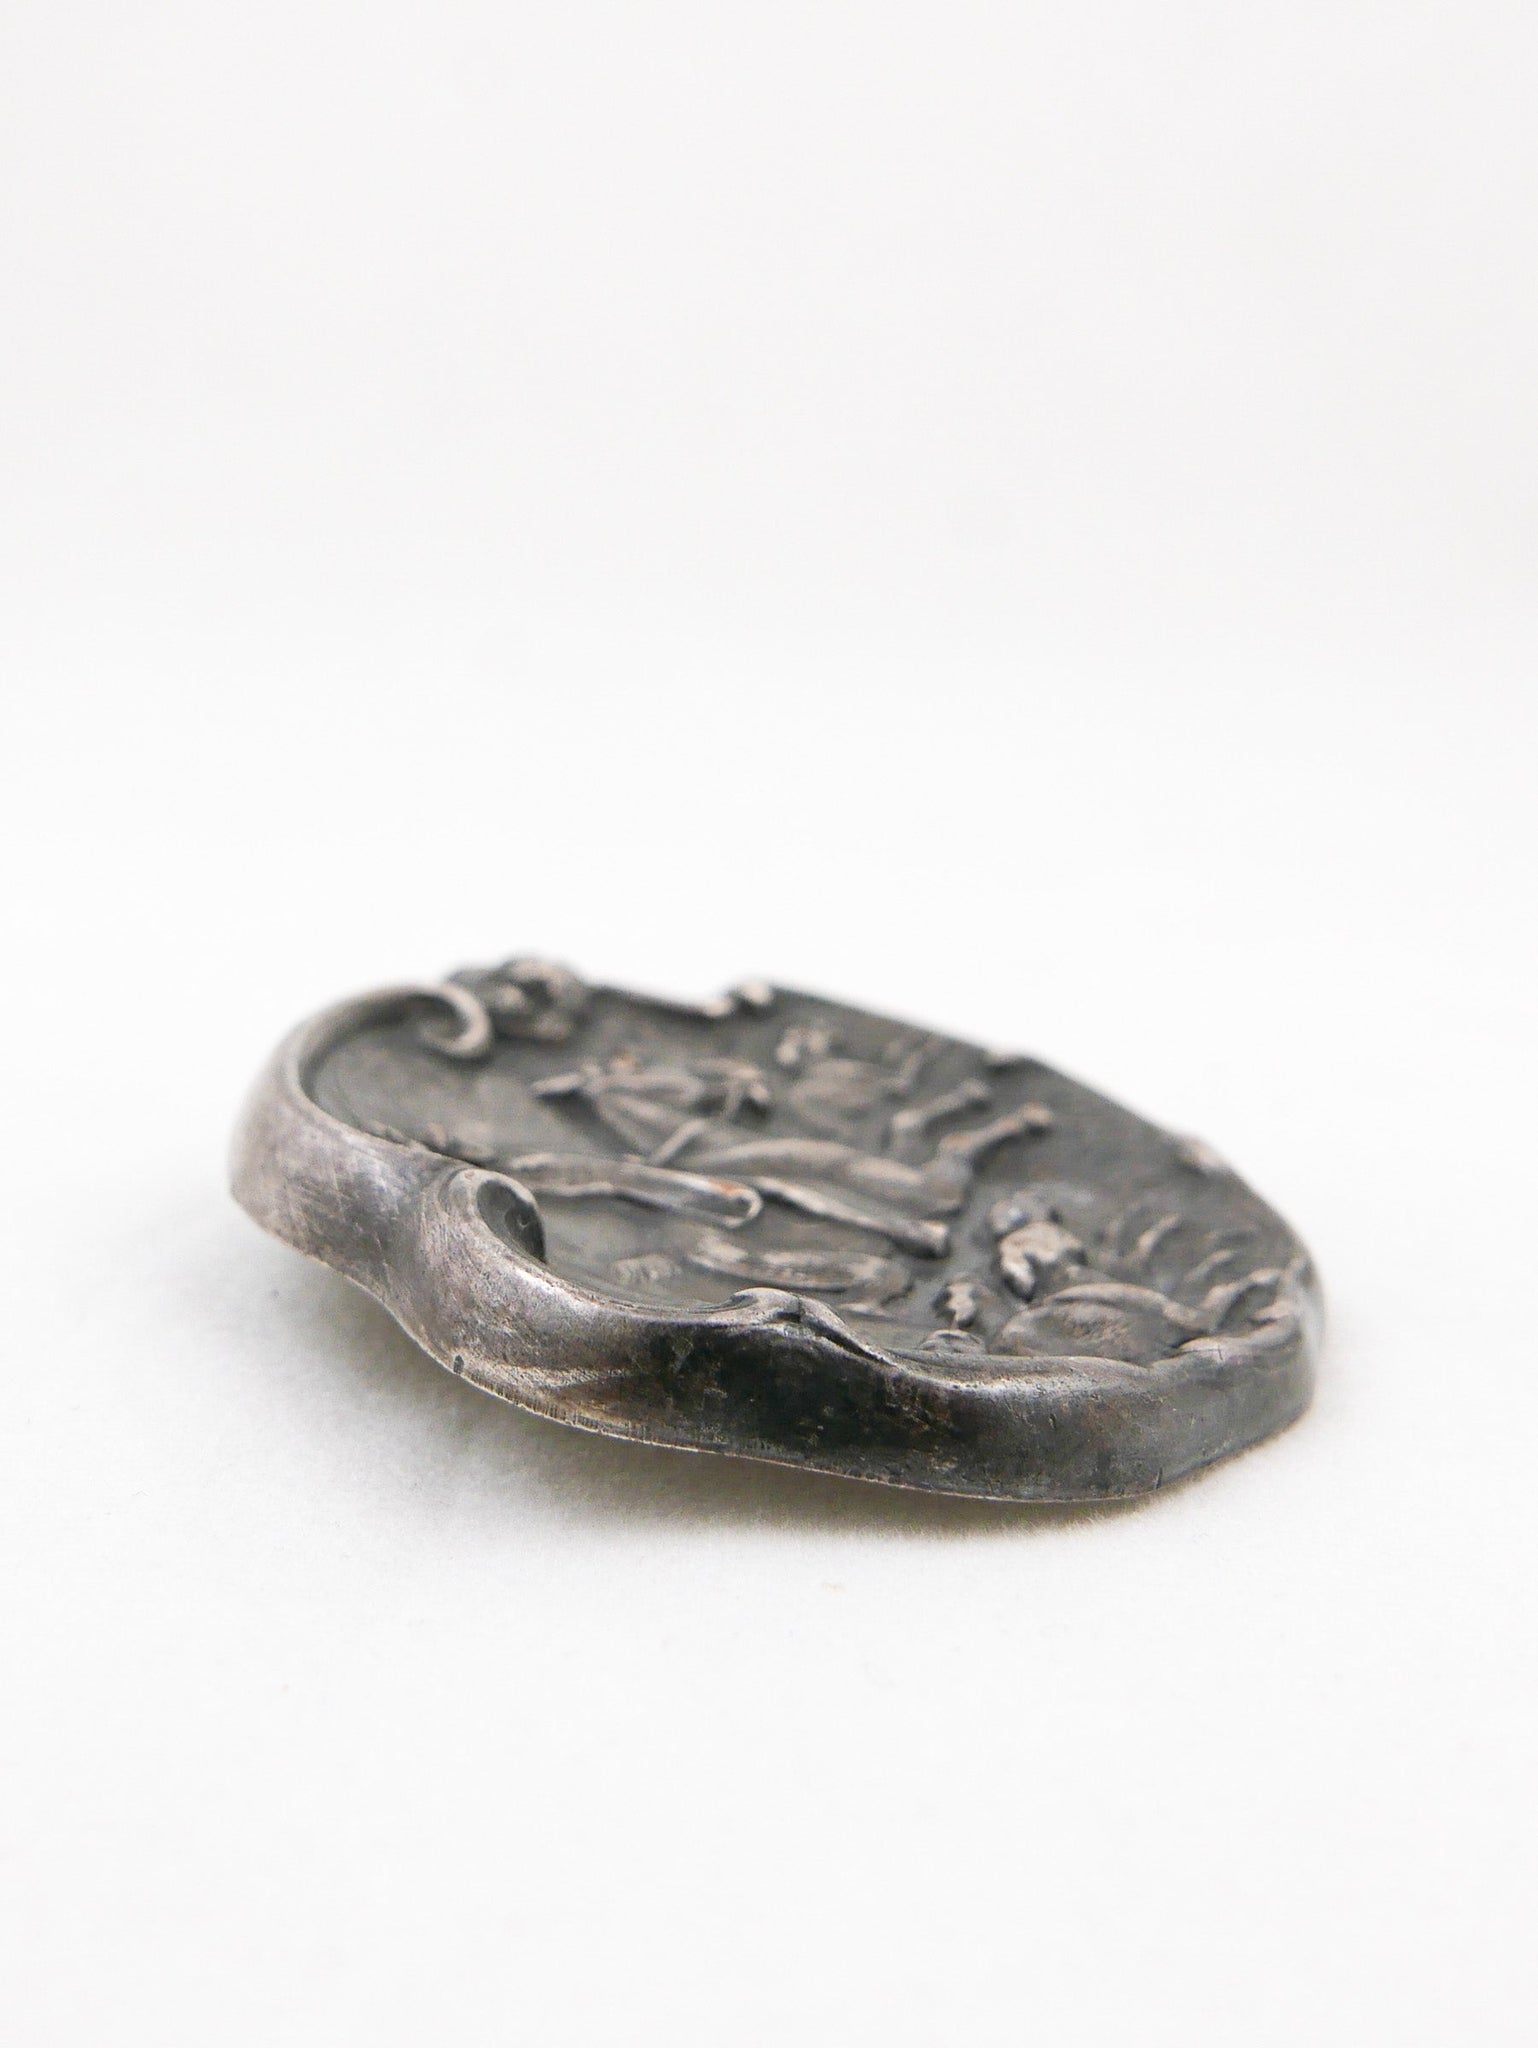 Antique English Hunting Pin